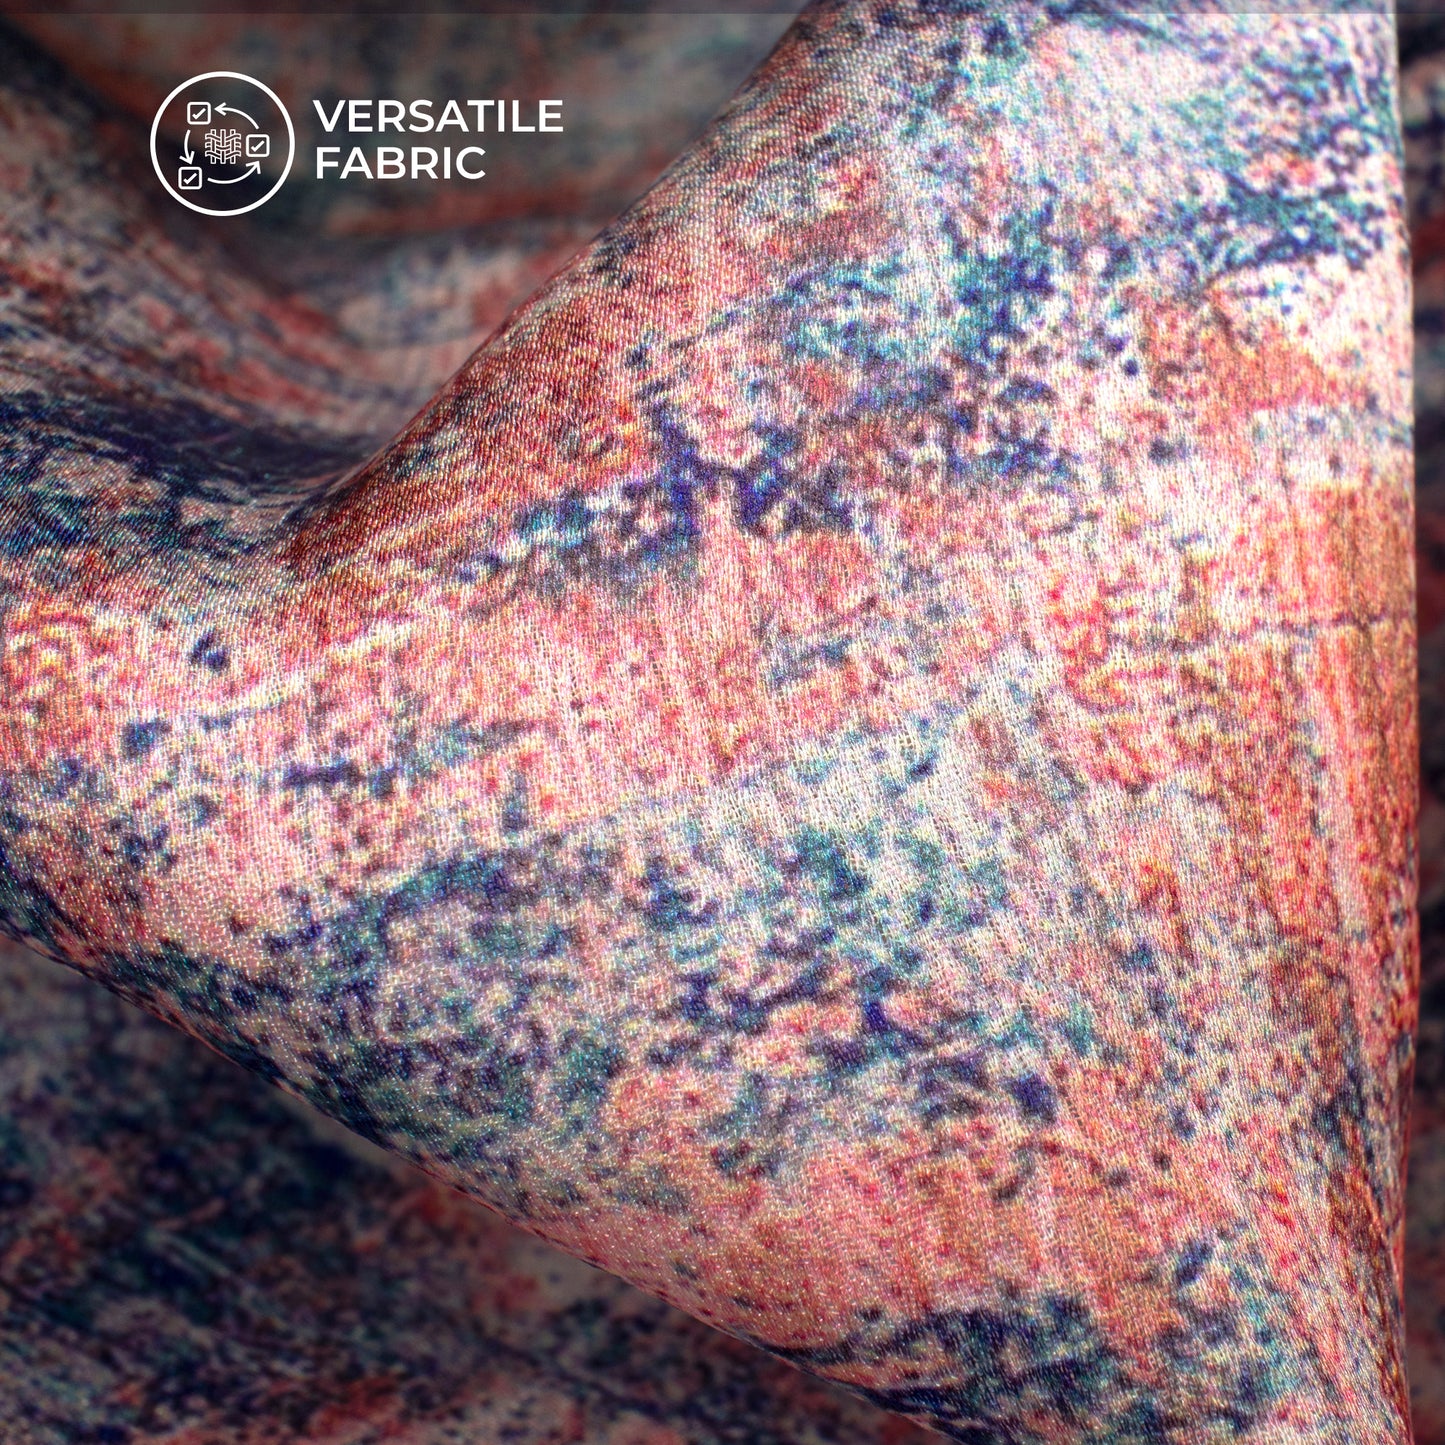 Watermelon Pink Abstract Tie And Dye Digital Print Chiffon Satin Fabric